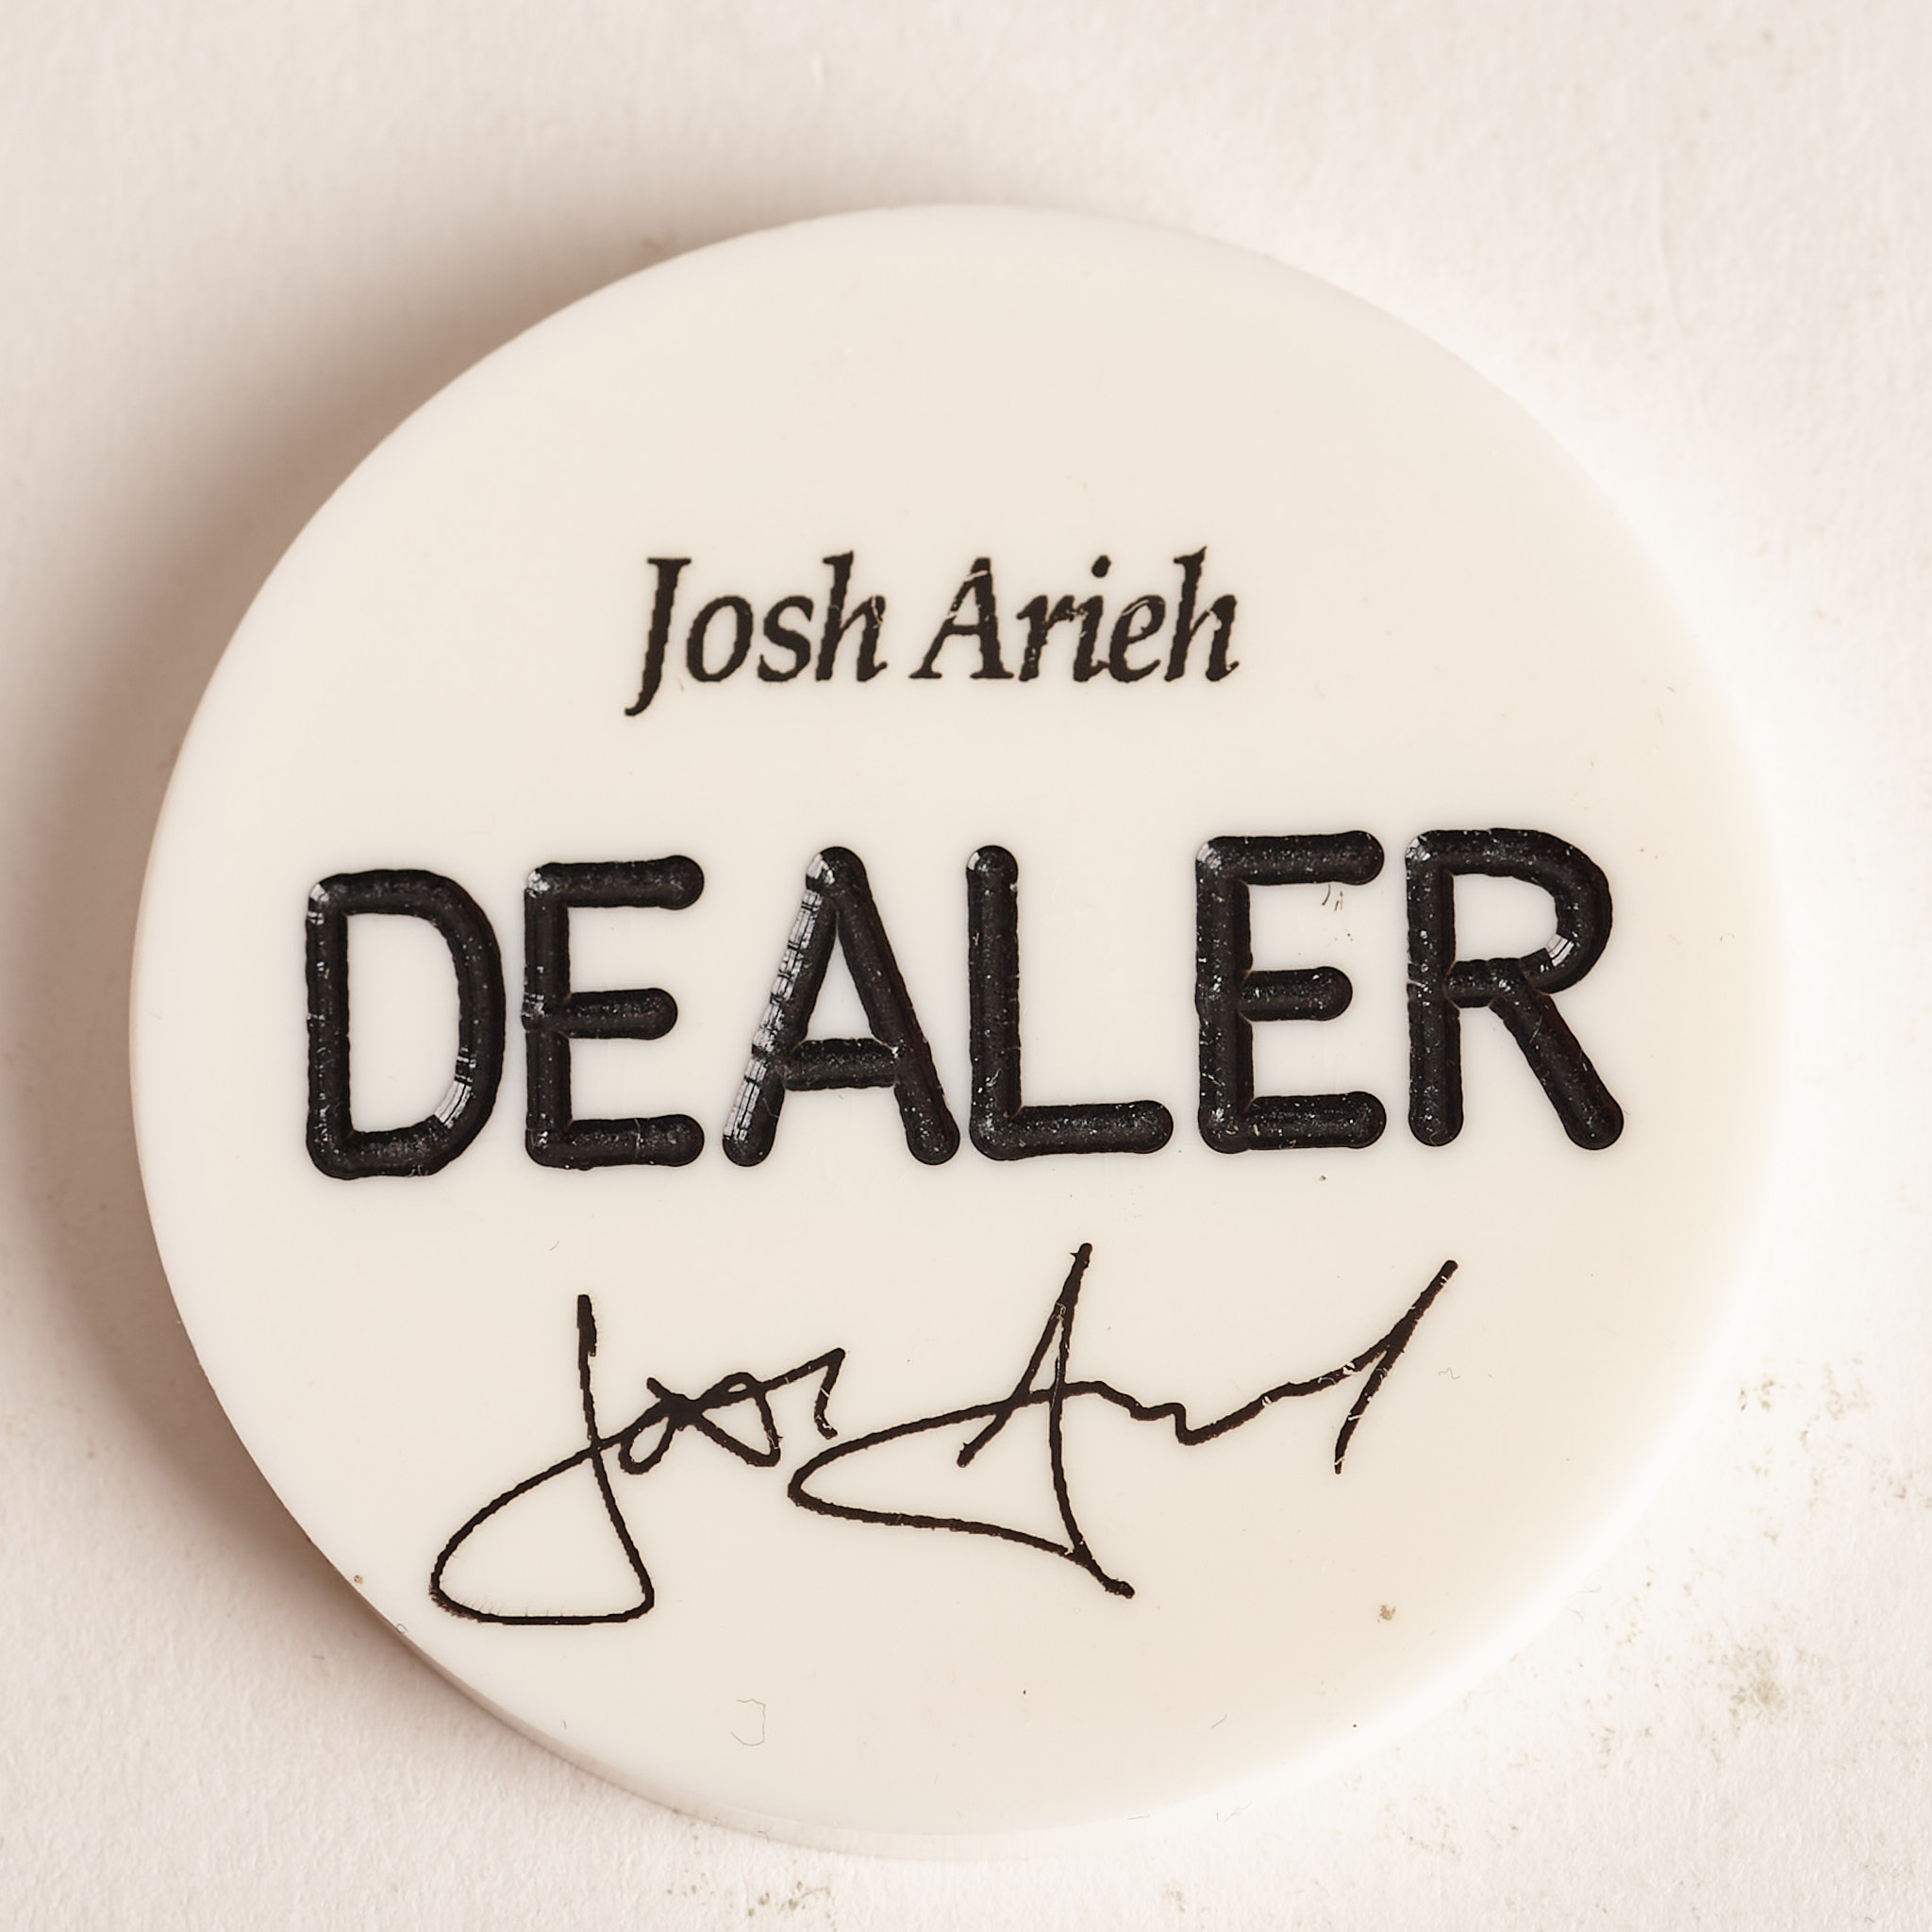 JOSH ARIEH “ATLANTA JOSH”, WORLD SERIES OF POKER WINNER, Poker Dealer Button